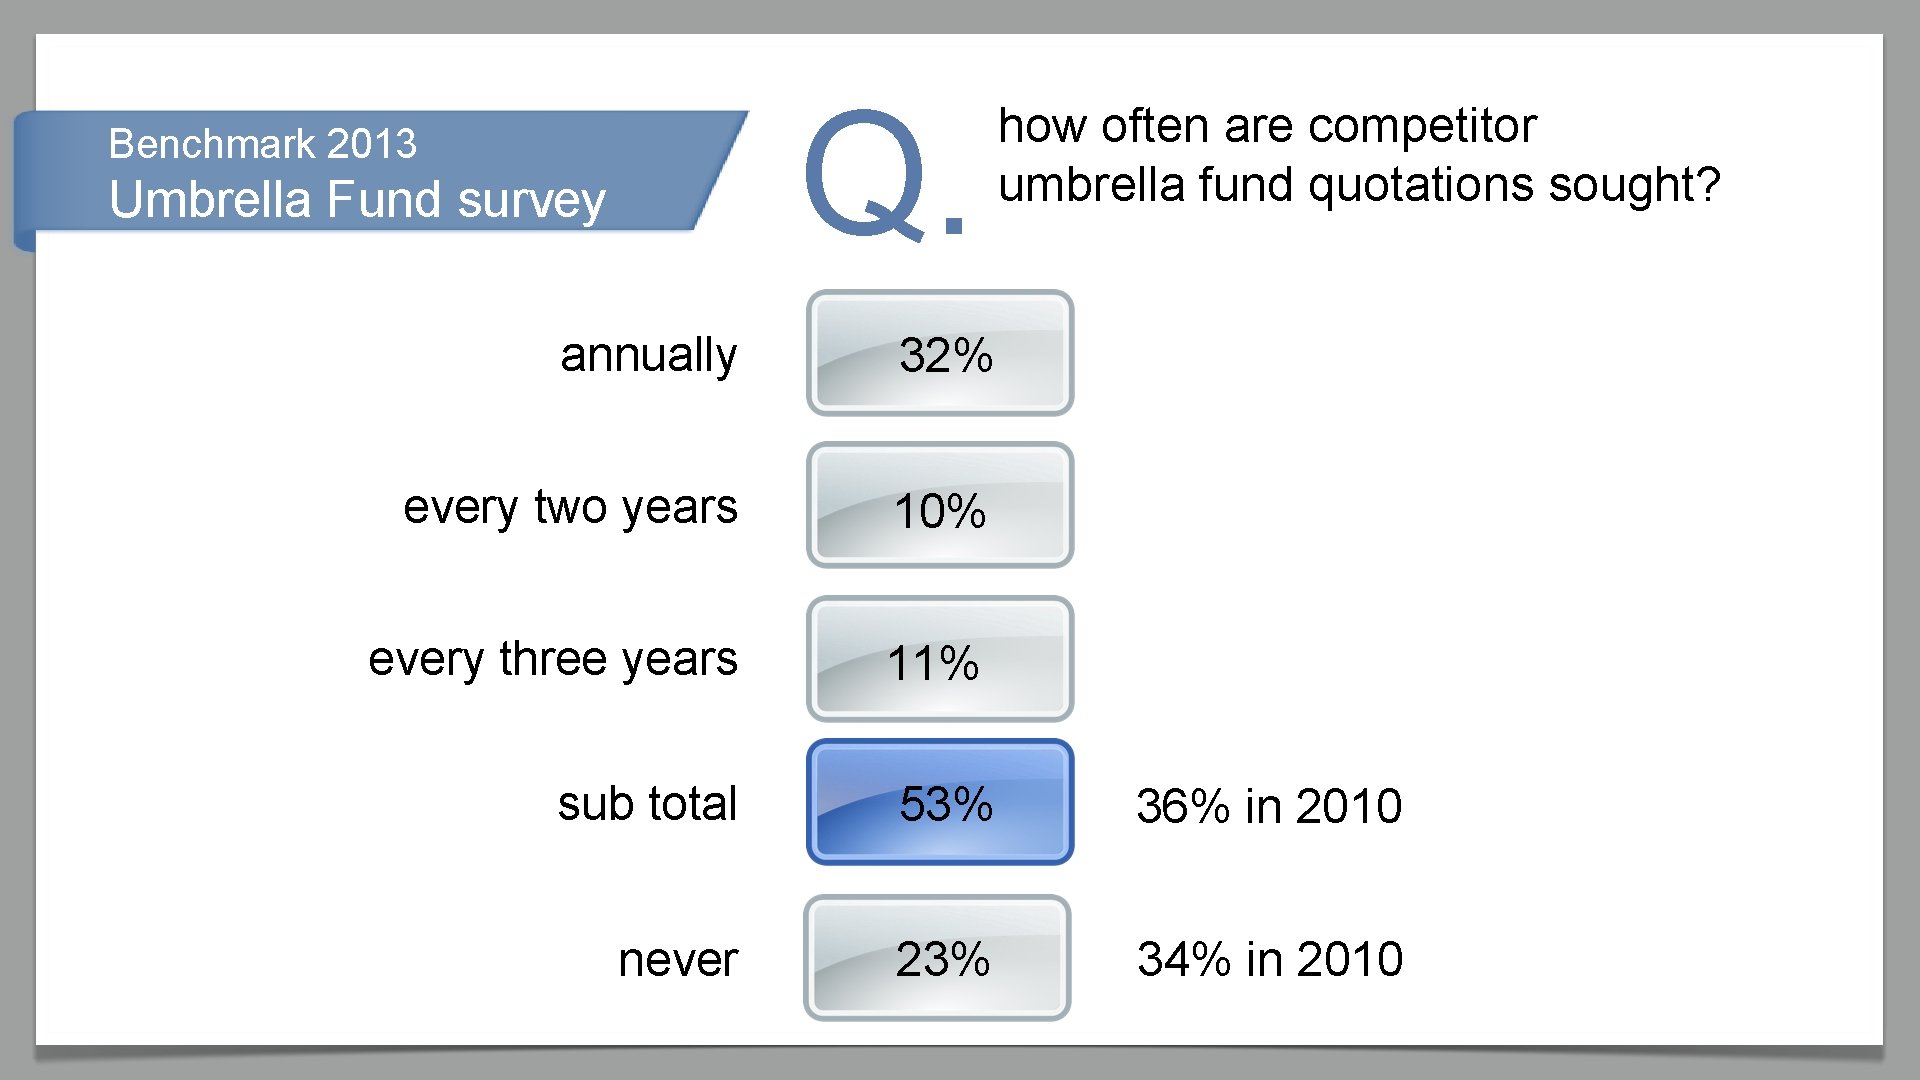 Q. Benchmark 2013 Umbrella Fund survey how often are competitor umbrella fund quotations sought?